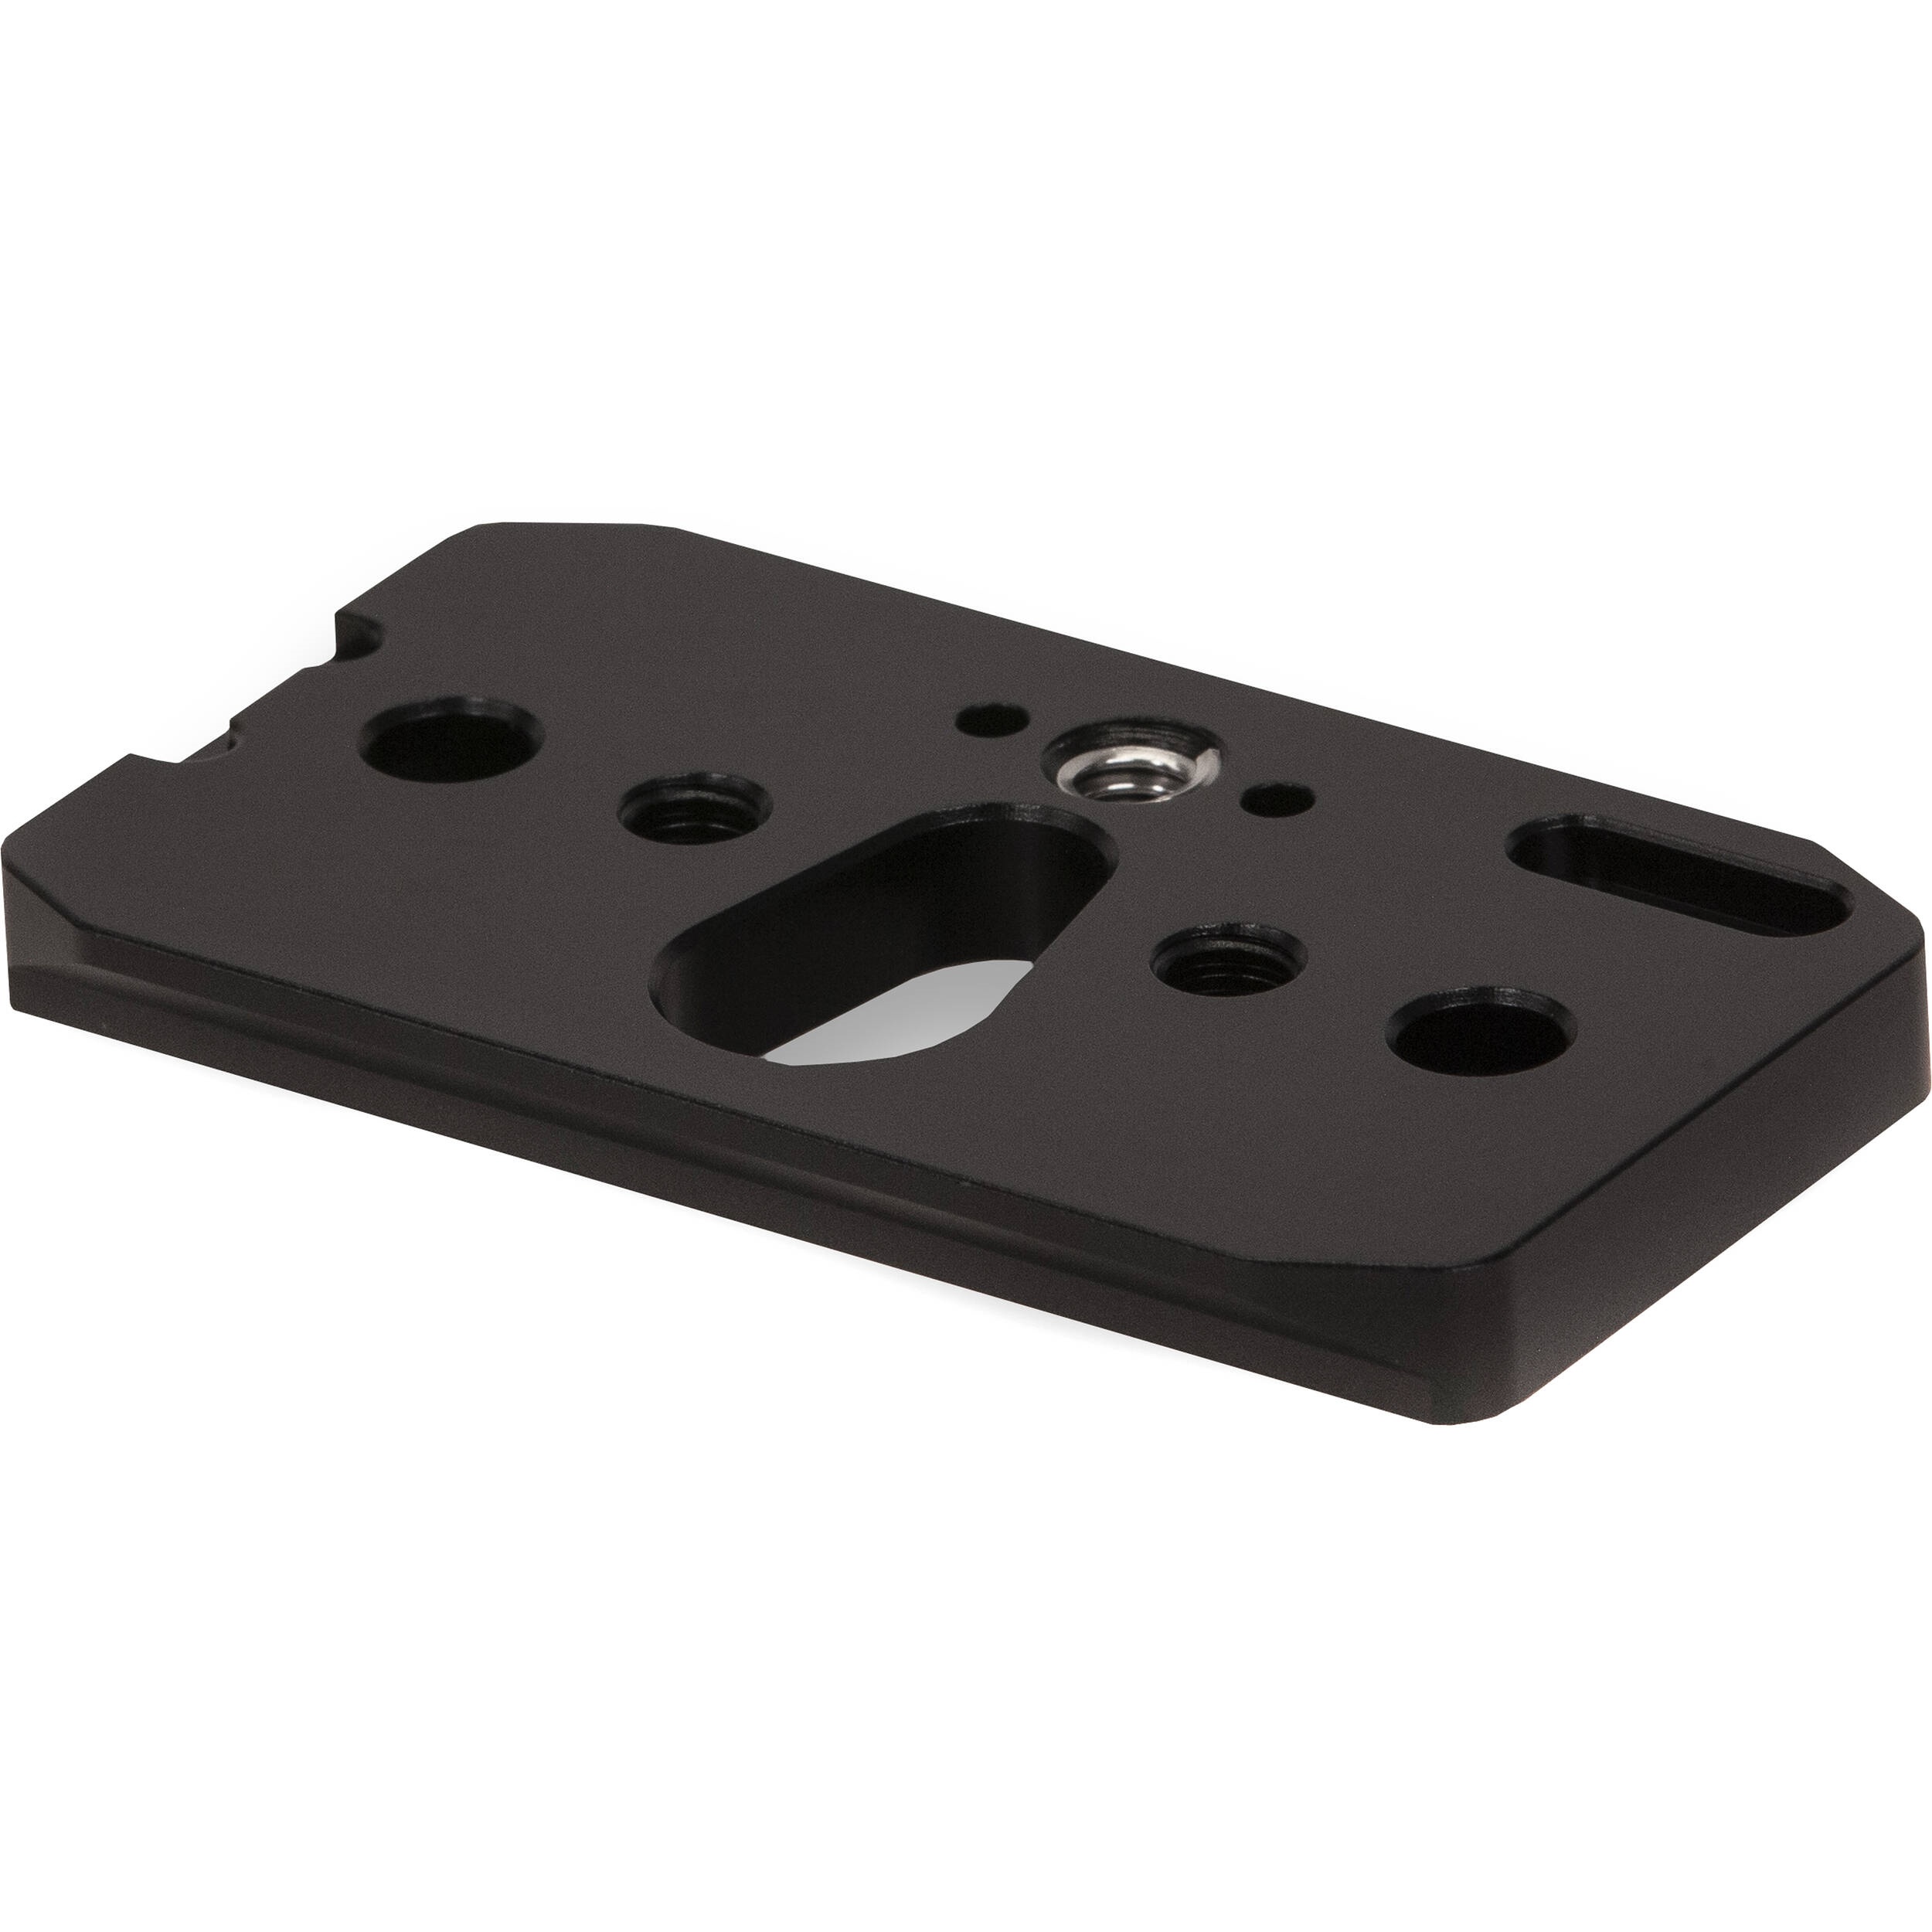 Tilta RED KOMODO Adapter Plate for 15mm LWS Baseplate (Black)